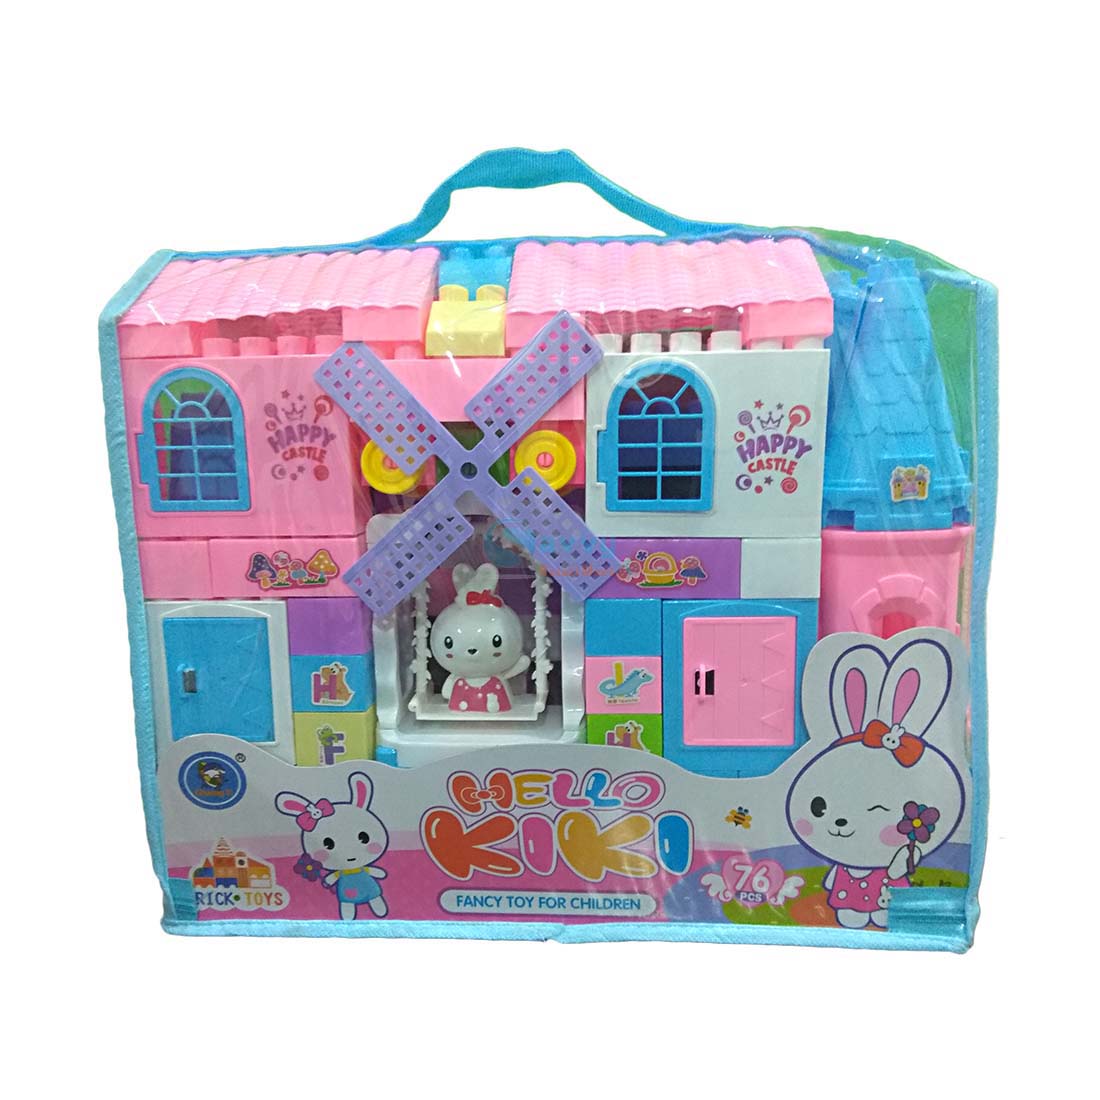 Savvy Toys Happy Fan Block Construction for Kids (Multicolor) SRT5518